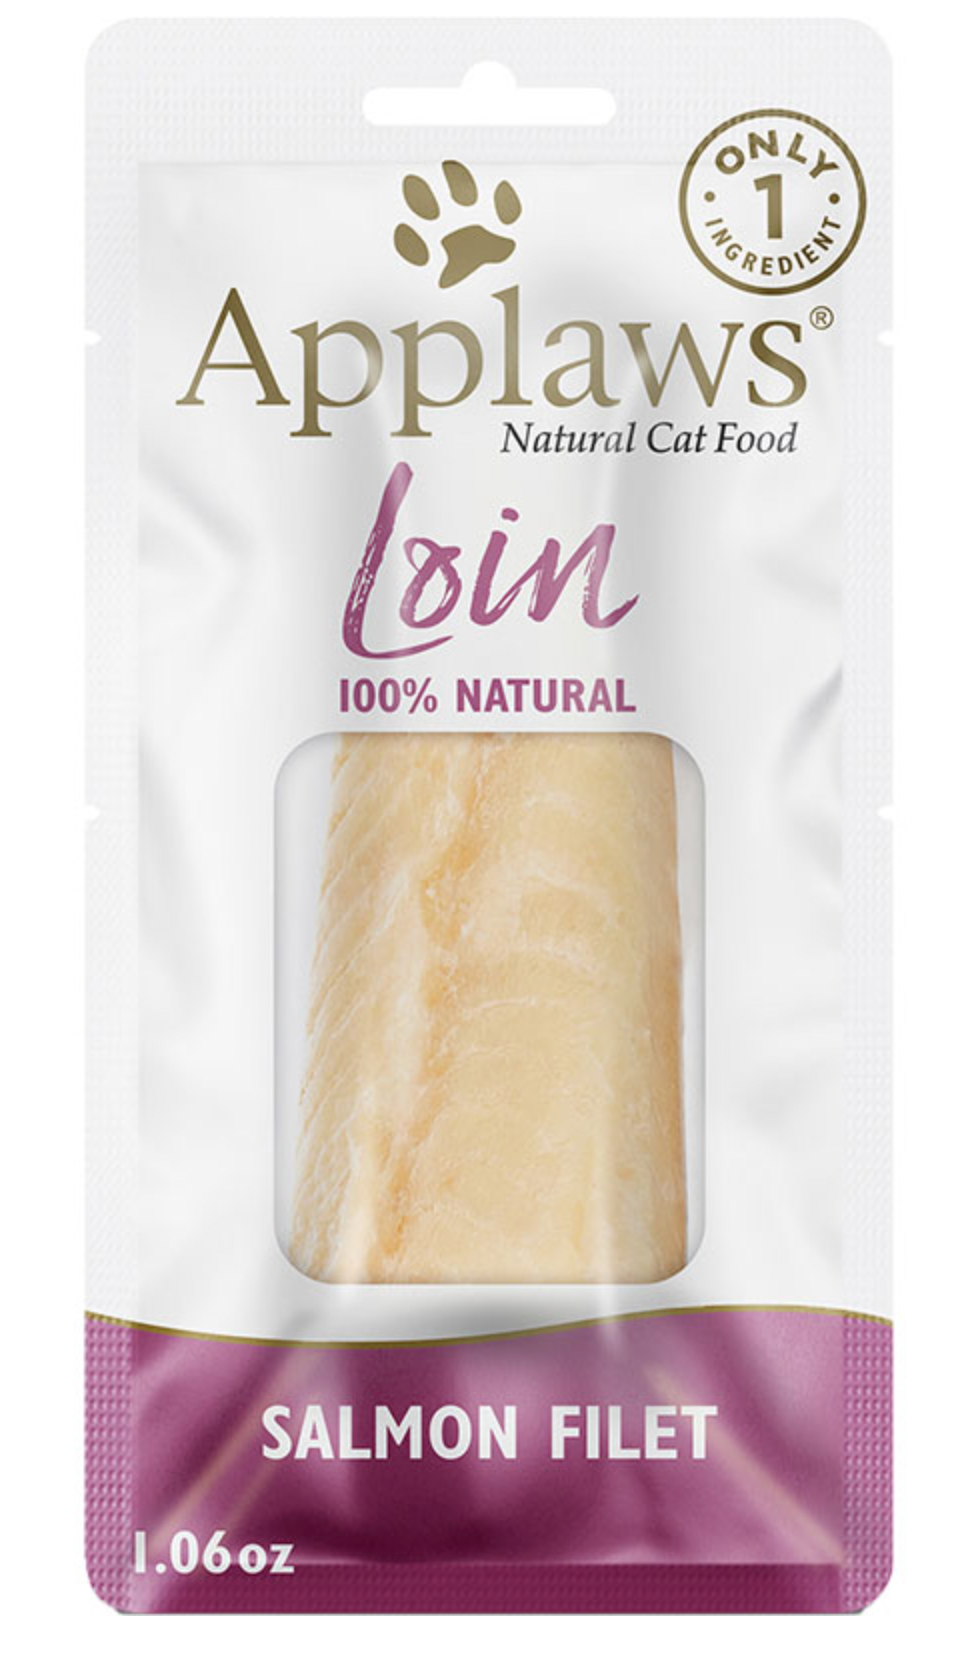 Applaws 100% Natural Salmon Filet, 1.06 oz.